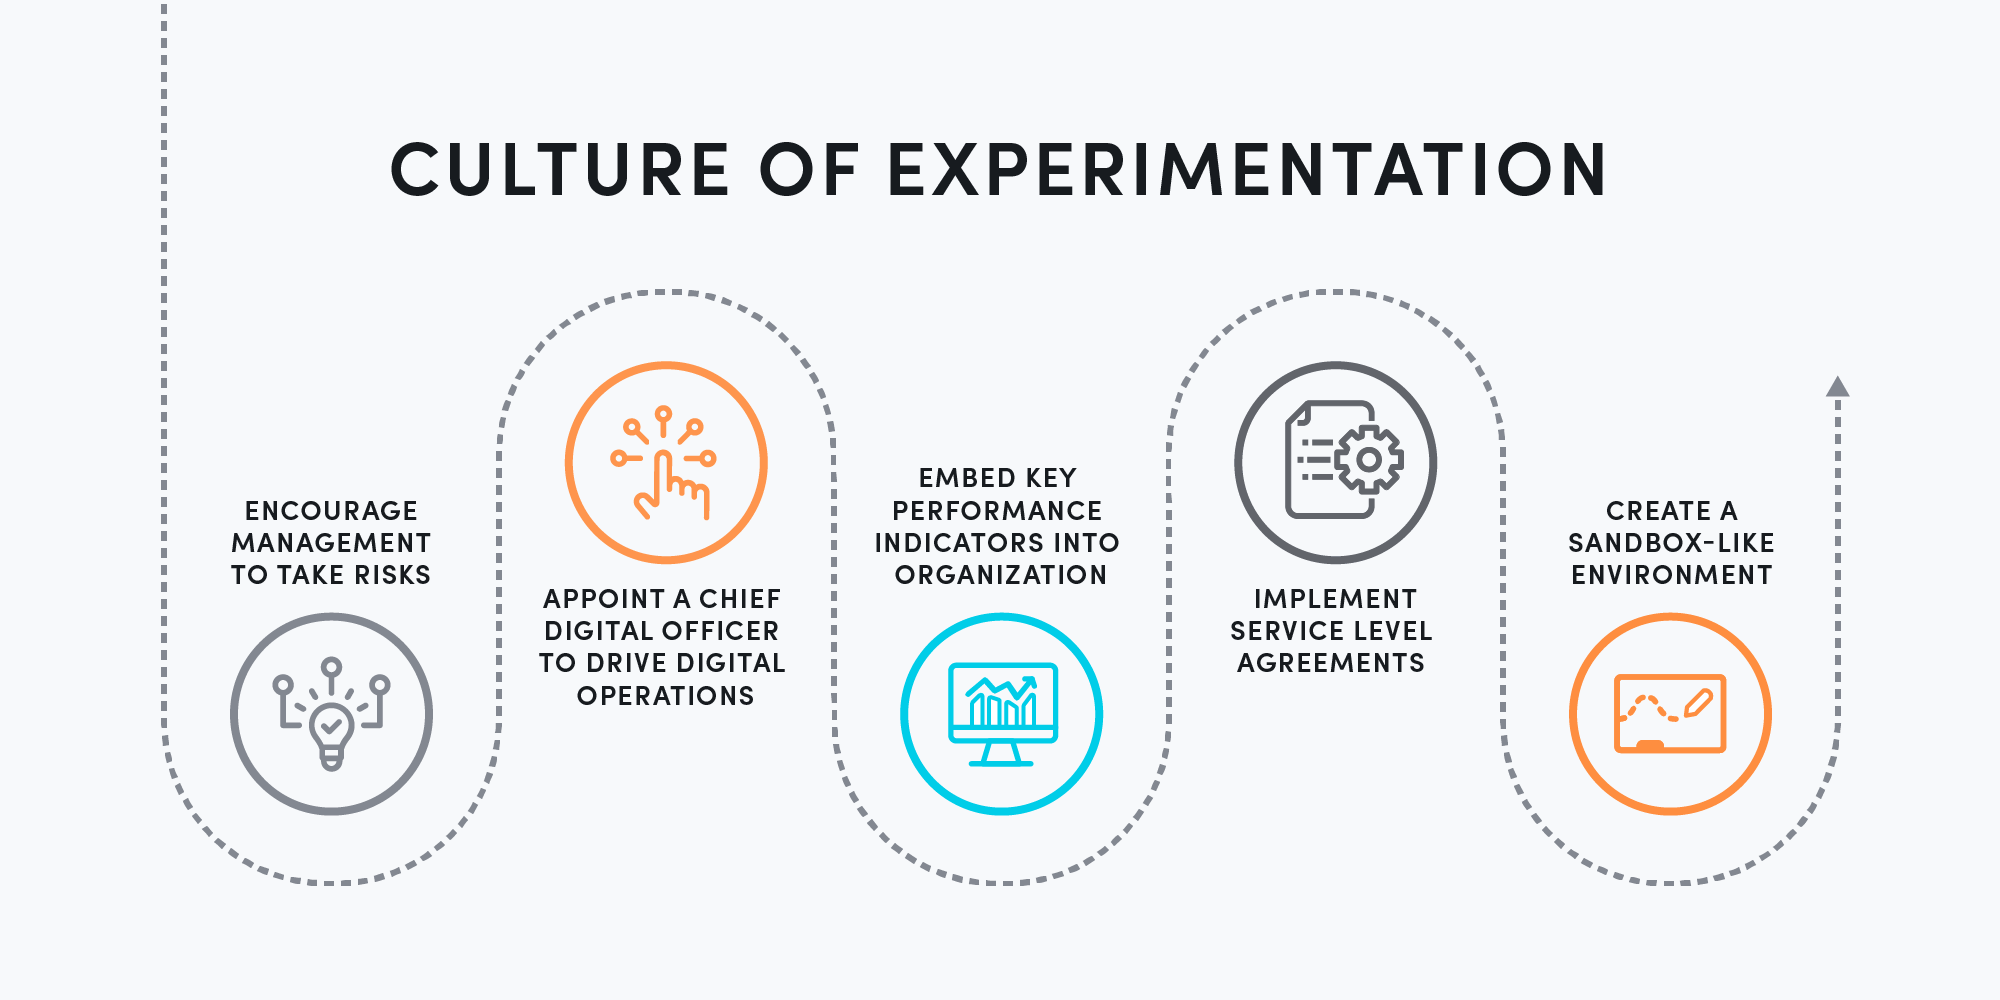 Culture of experimentation in digital transformation